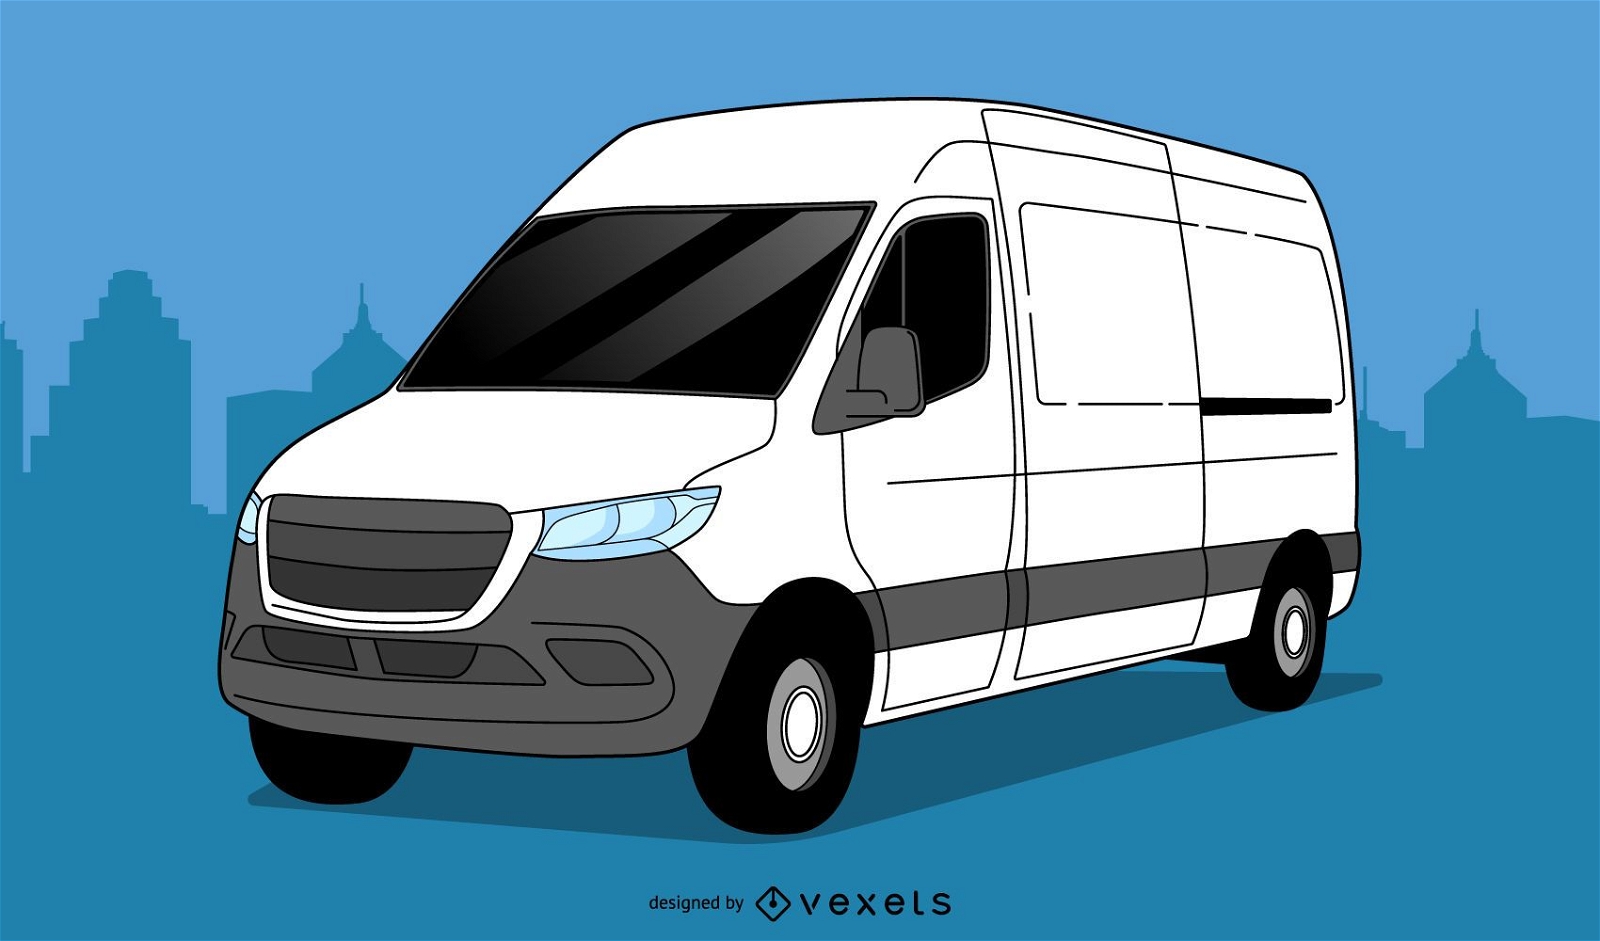 SUV Van Illustration Design - Vector Download